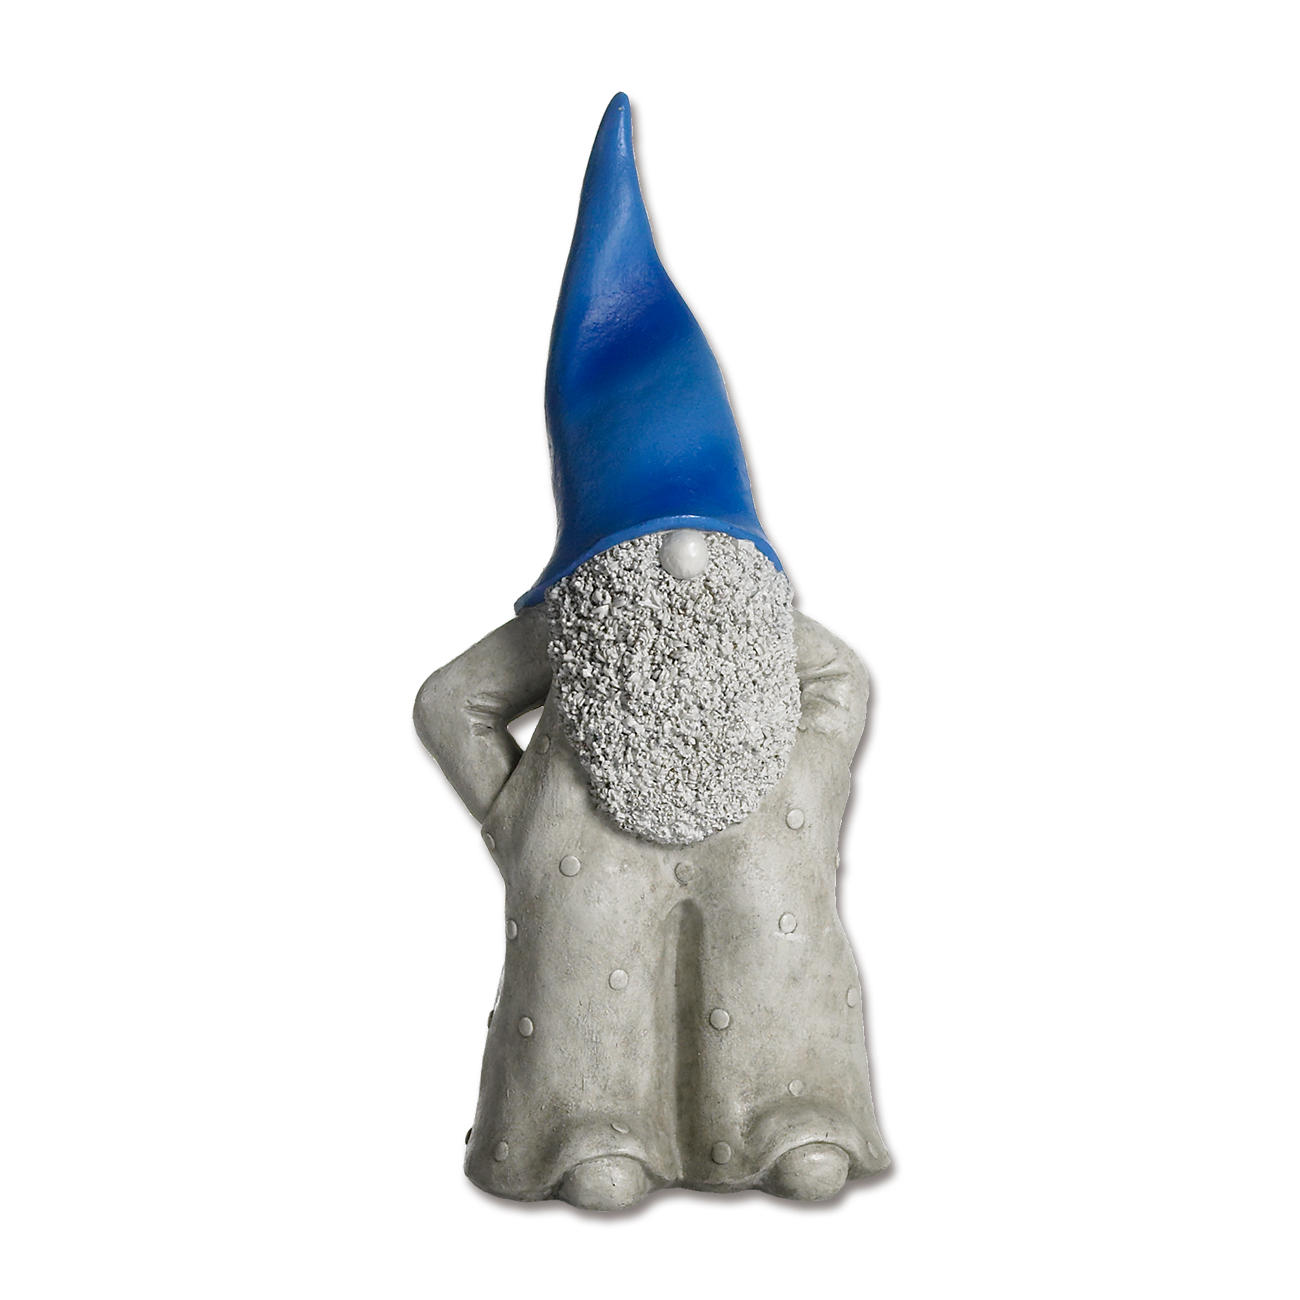 Buy Swedish Garden Gnome 3 Year Product Guarantee